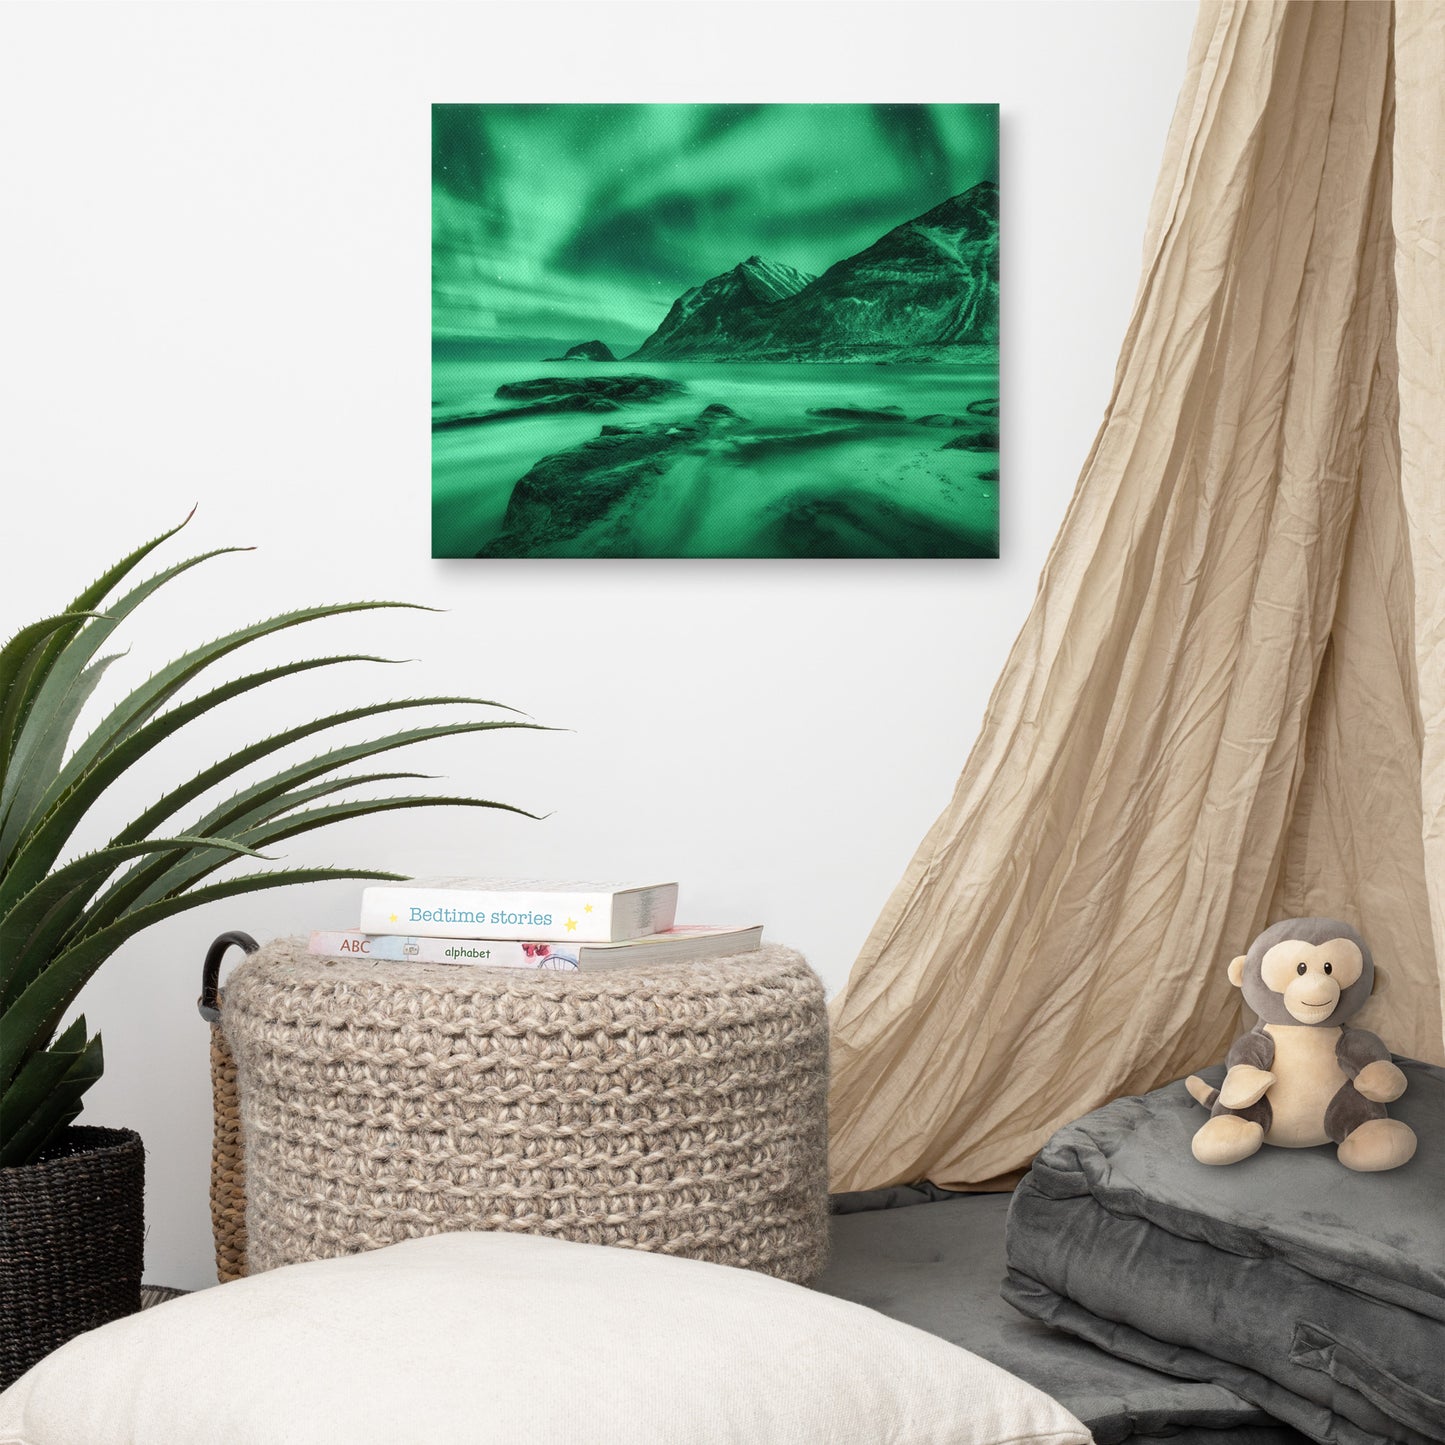 Green Northern Lights and Mountain Coast Lofoten islands, Norway Landscape Photo Canvas Wall Art Prints